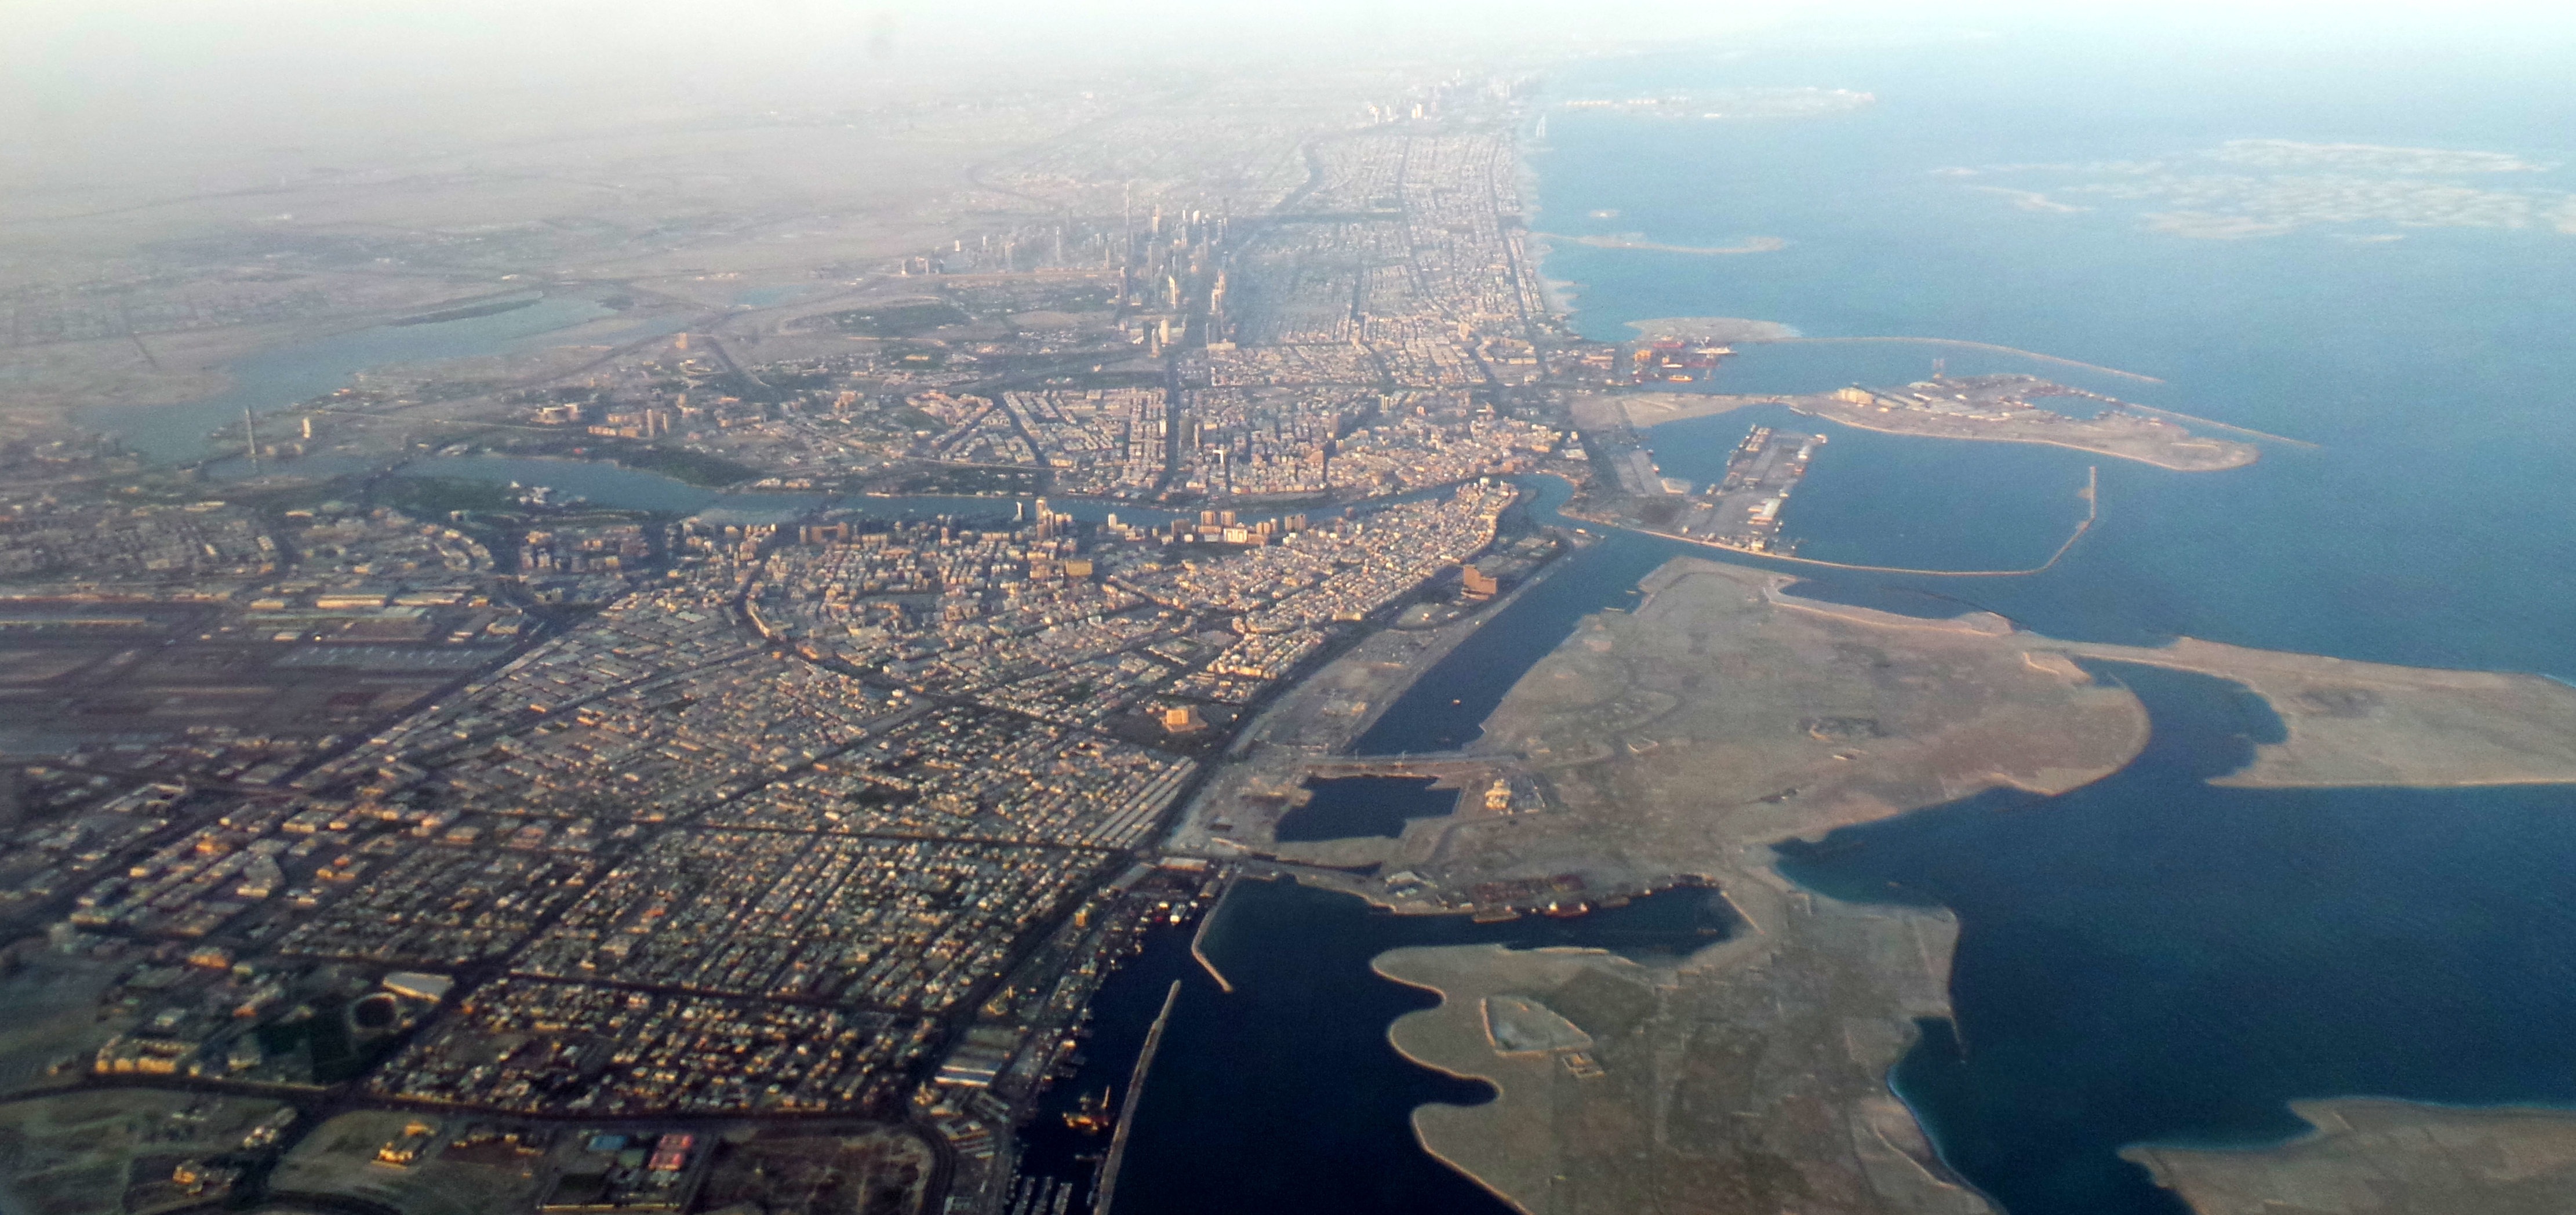 Luftbild von Dubai.